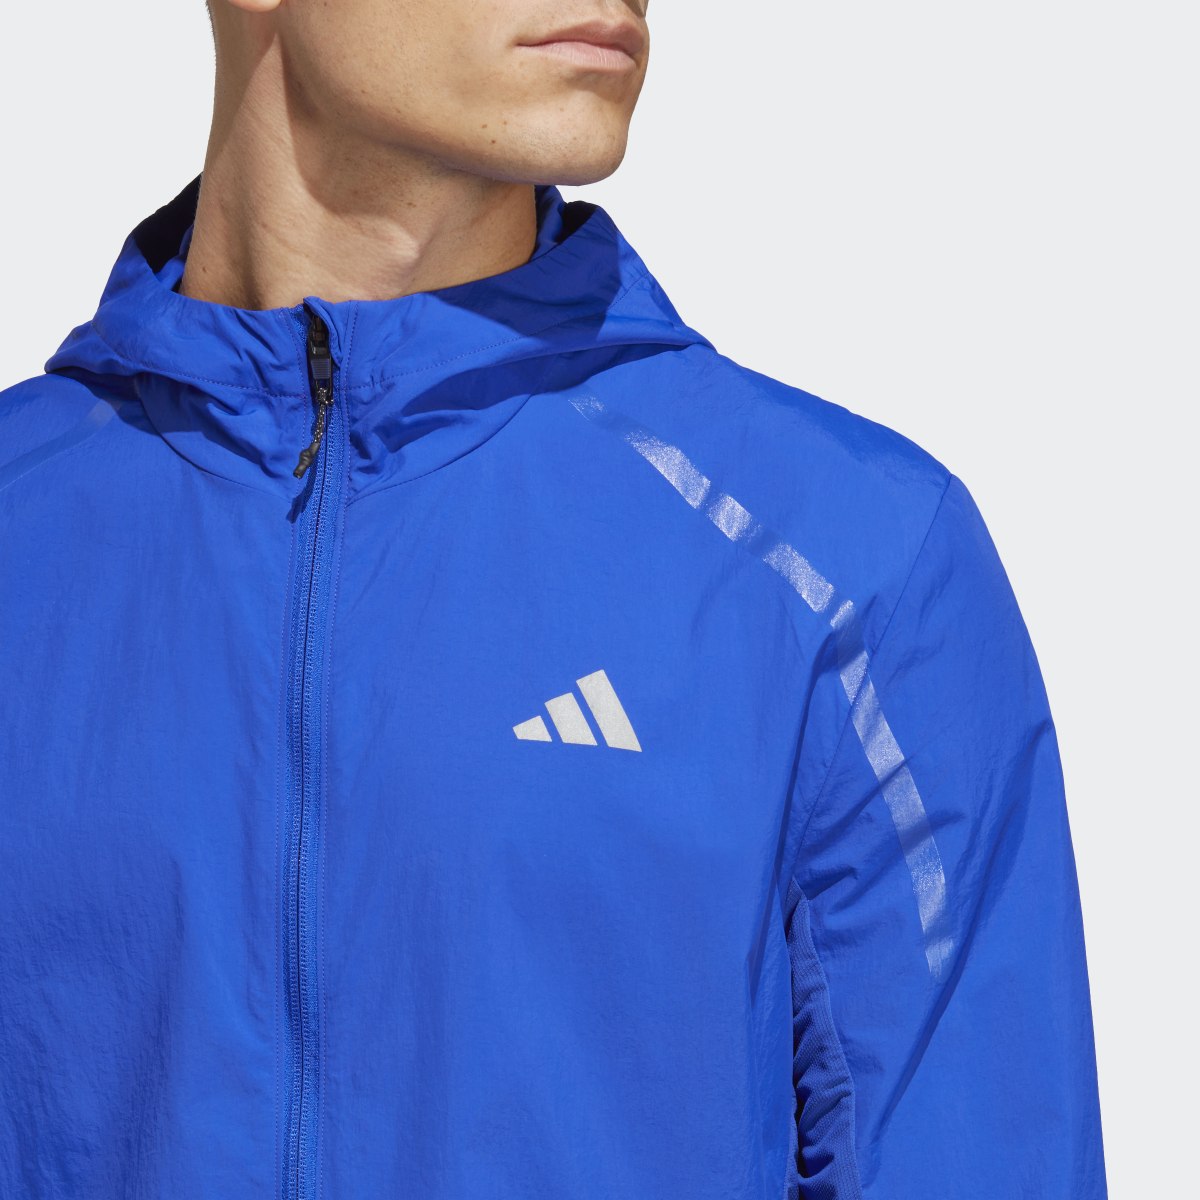 Adidas Marathon Warm-Up Running Jacket. 6